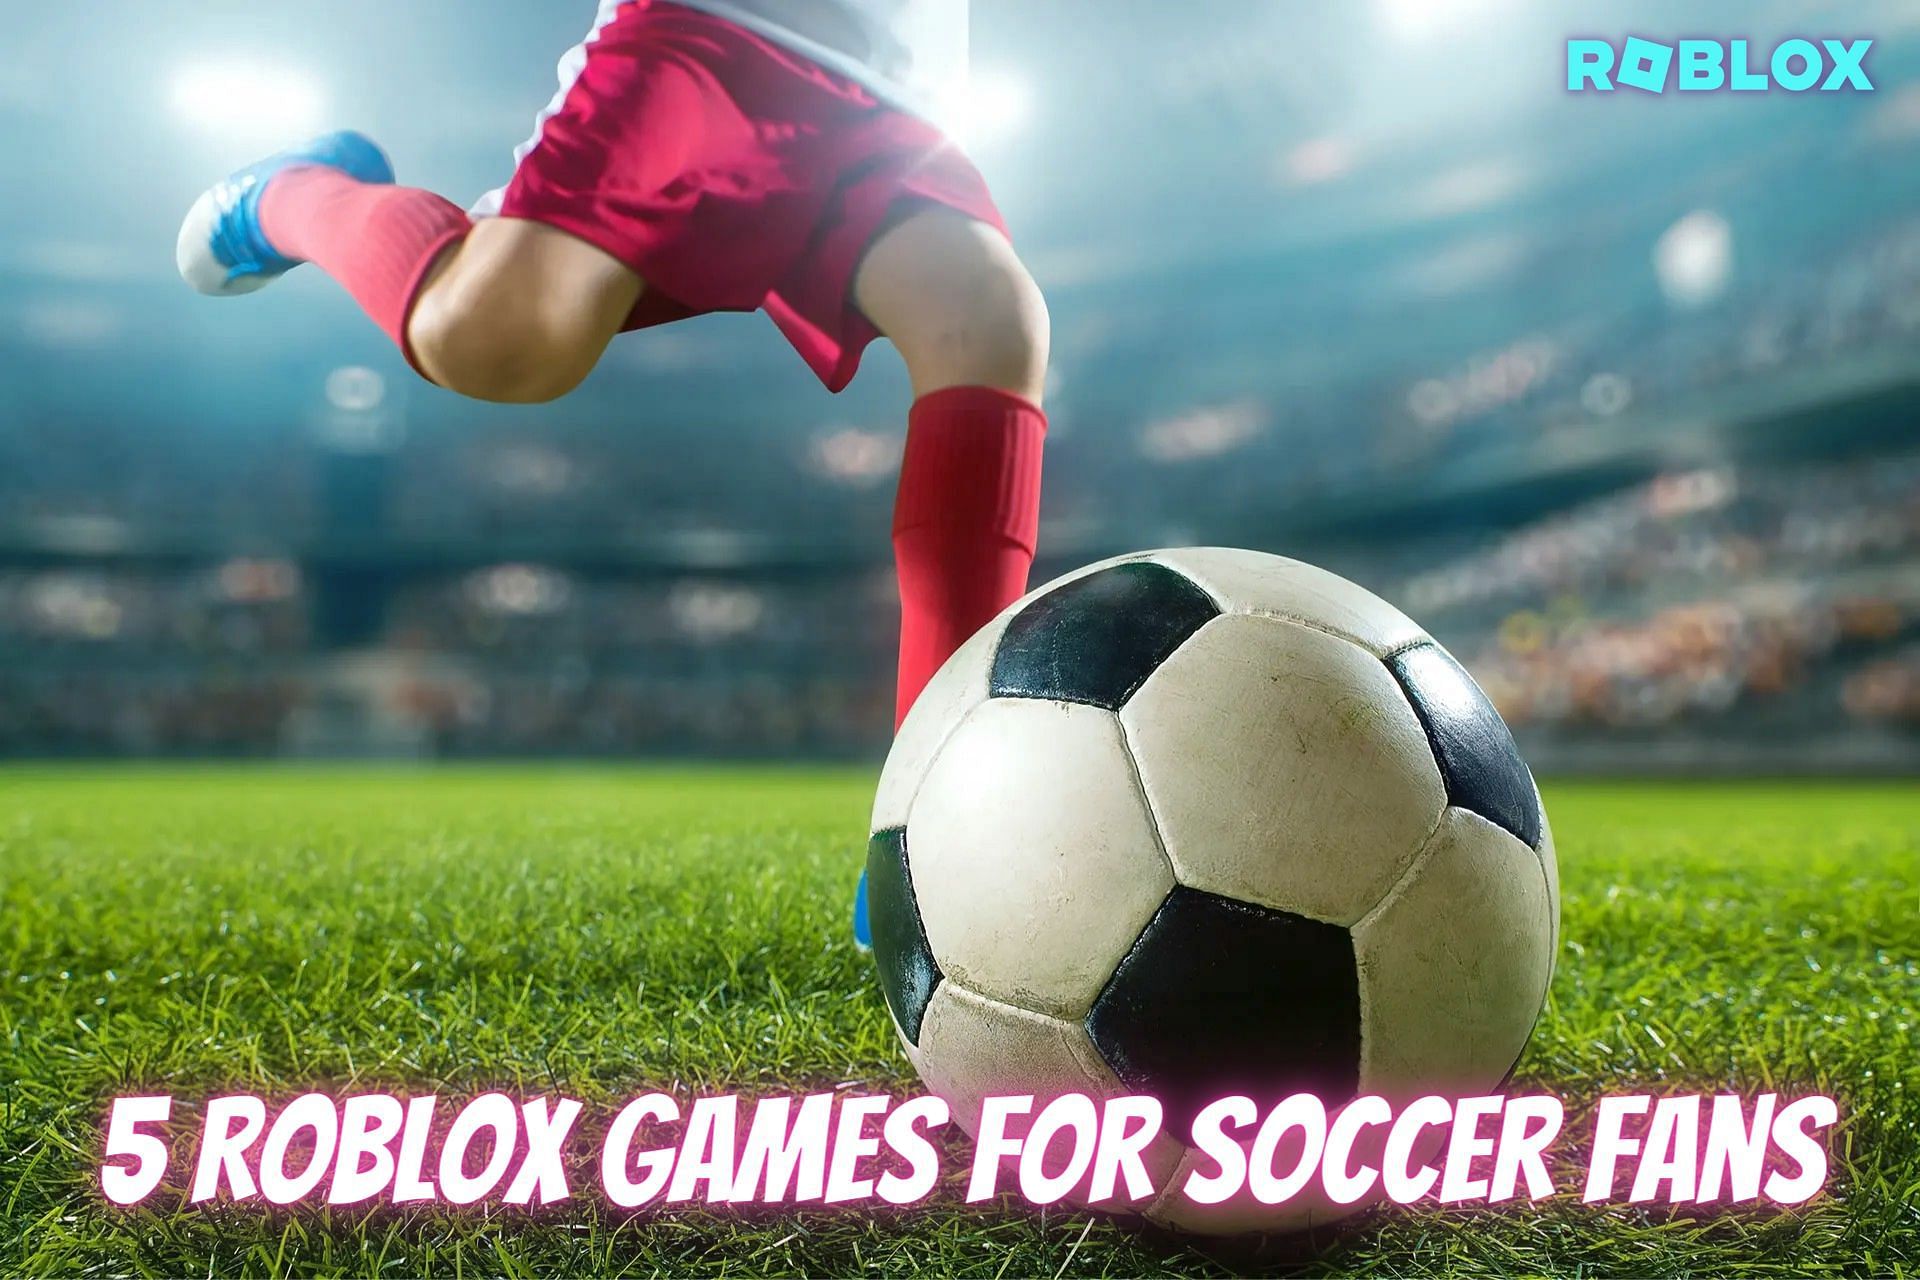 Play online soccer (Image via Sportskeeda)